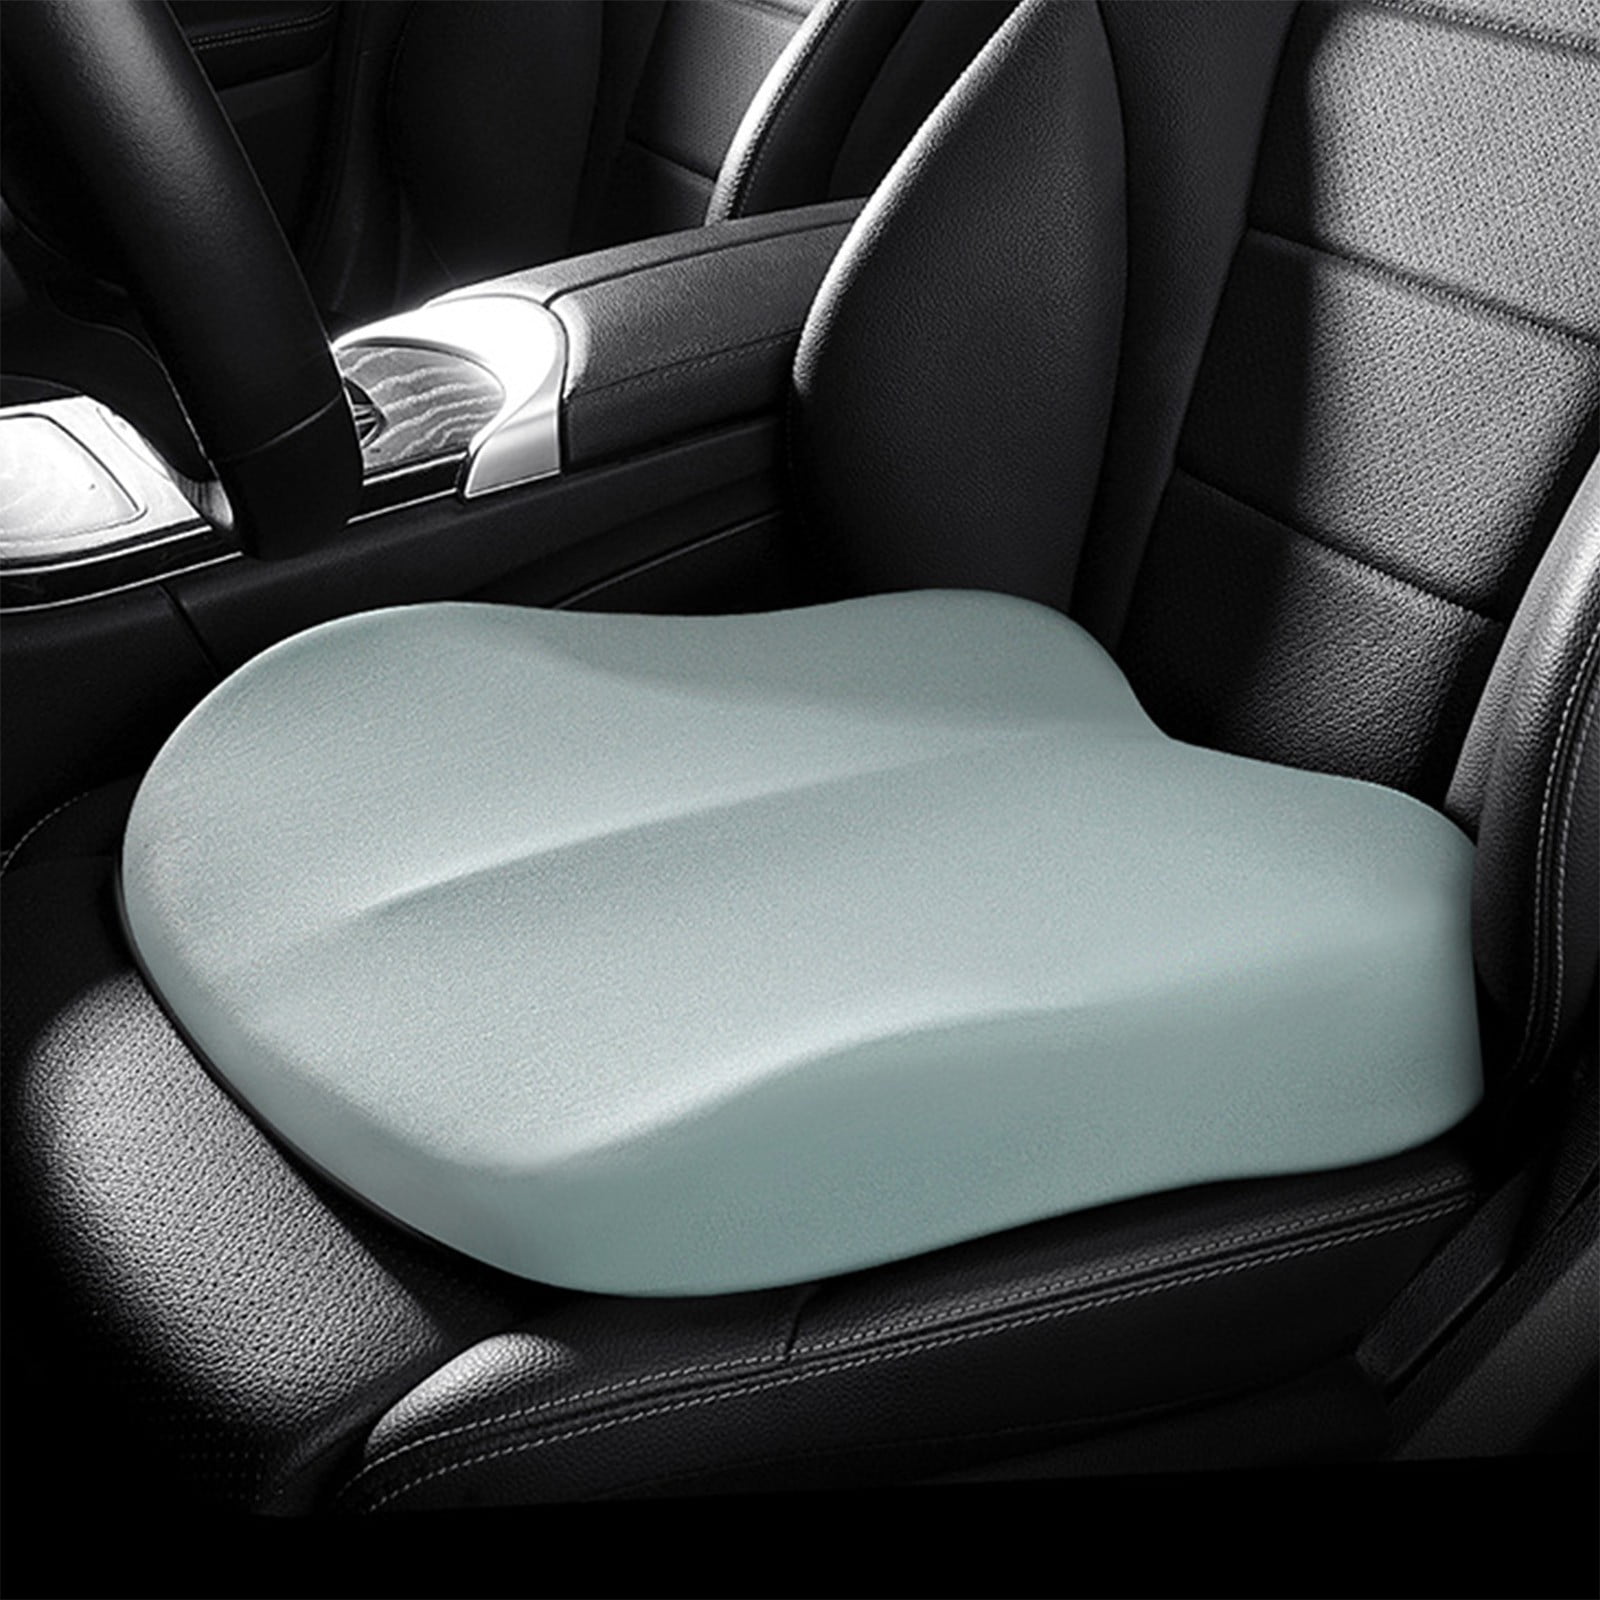 solacol Car Wedge Seat Cushion for Car Seat Driver/Passenger- Wedge Car Seat  Cushions for Driving Improve Vision/Posture - Memory Foam Car Seat Cushion  for Hip Pain 